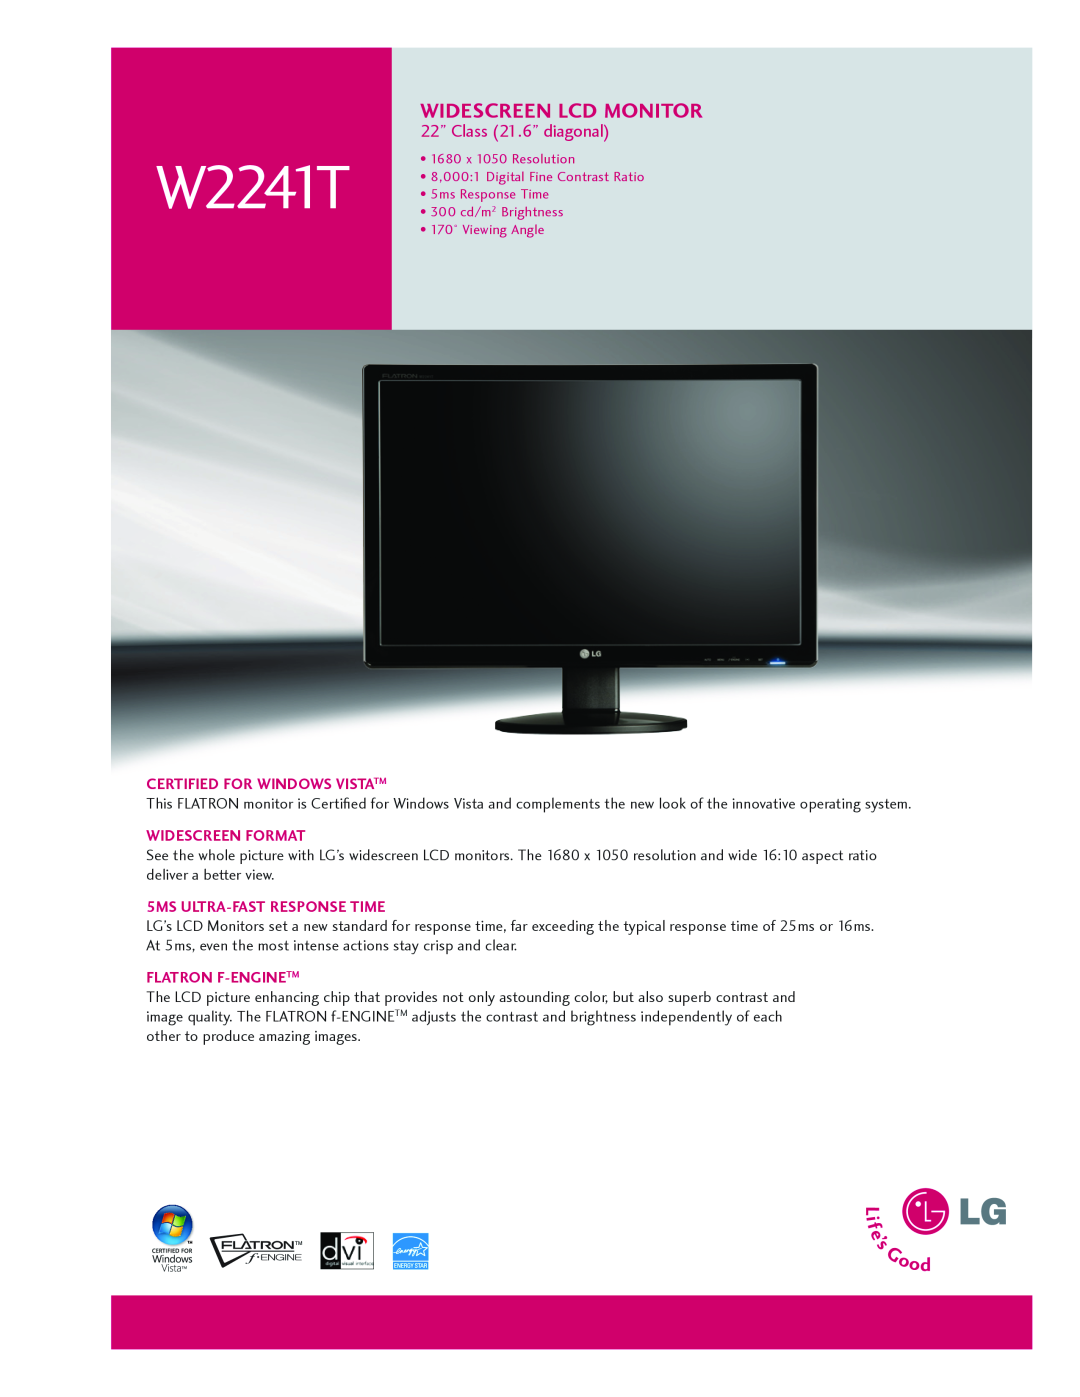 LG Electronics W2241T manual Widescreen LCD Monitor, 22” Class 21.6” diagonal, certified for windows vistaTM 